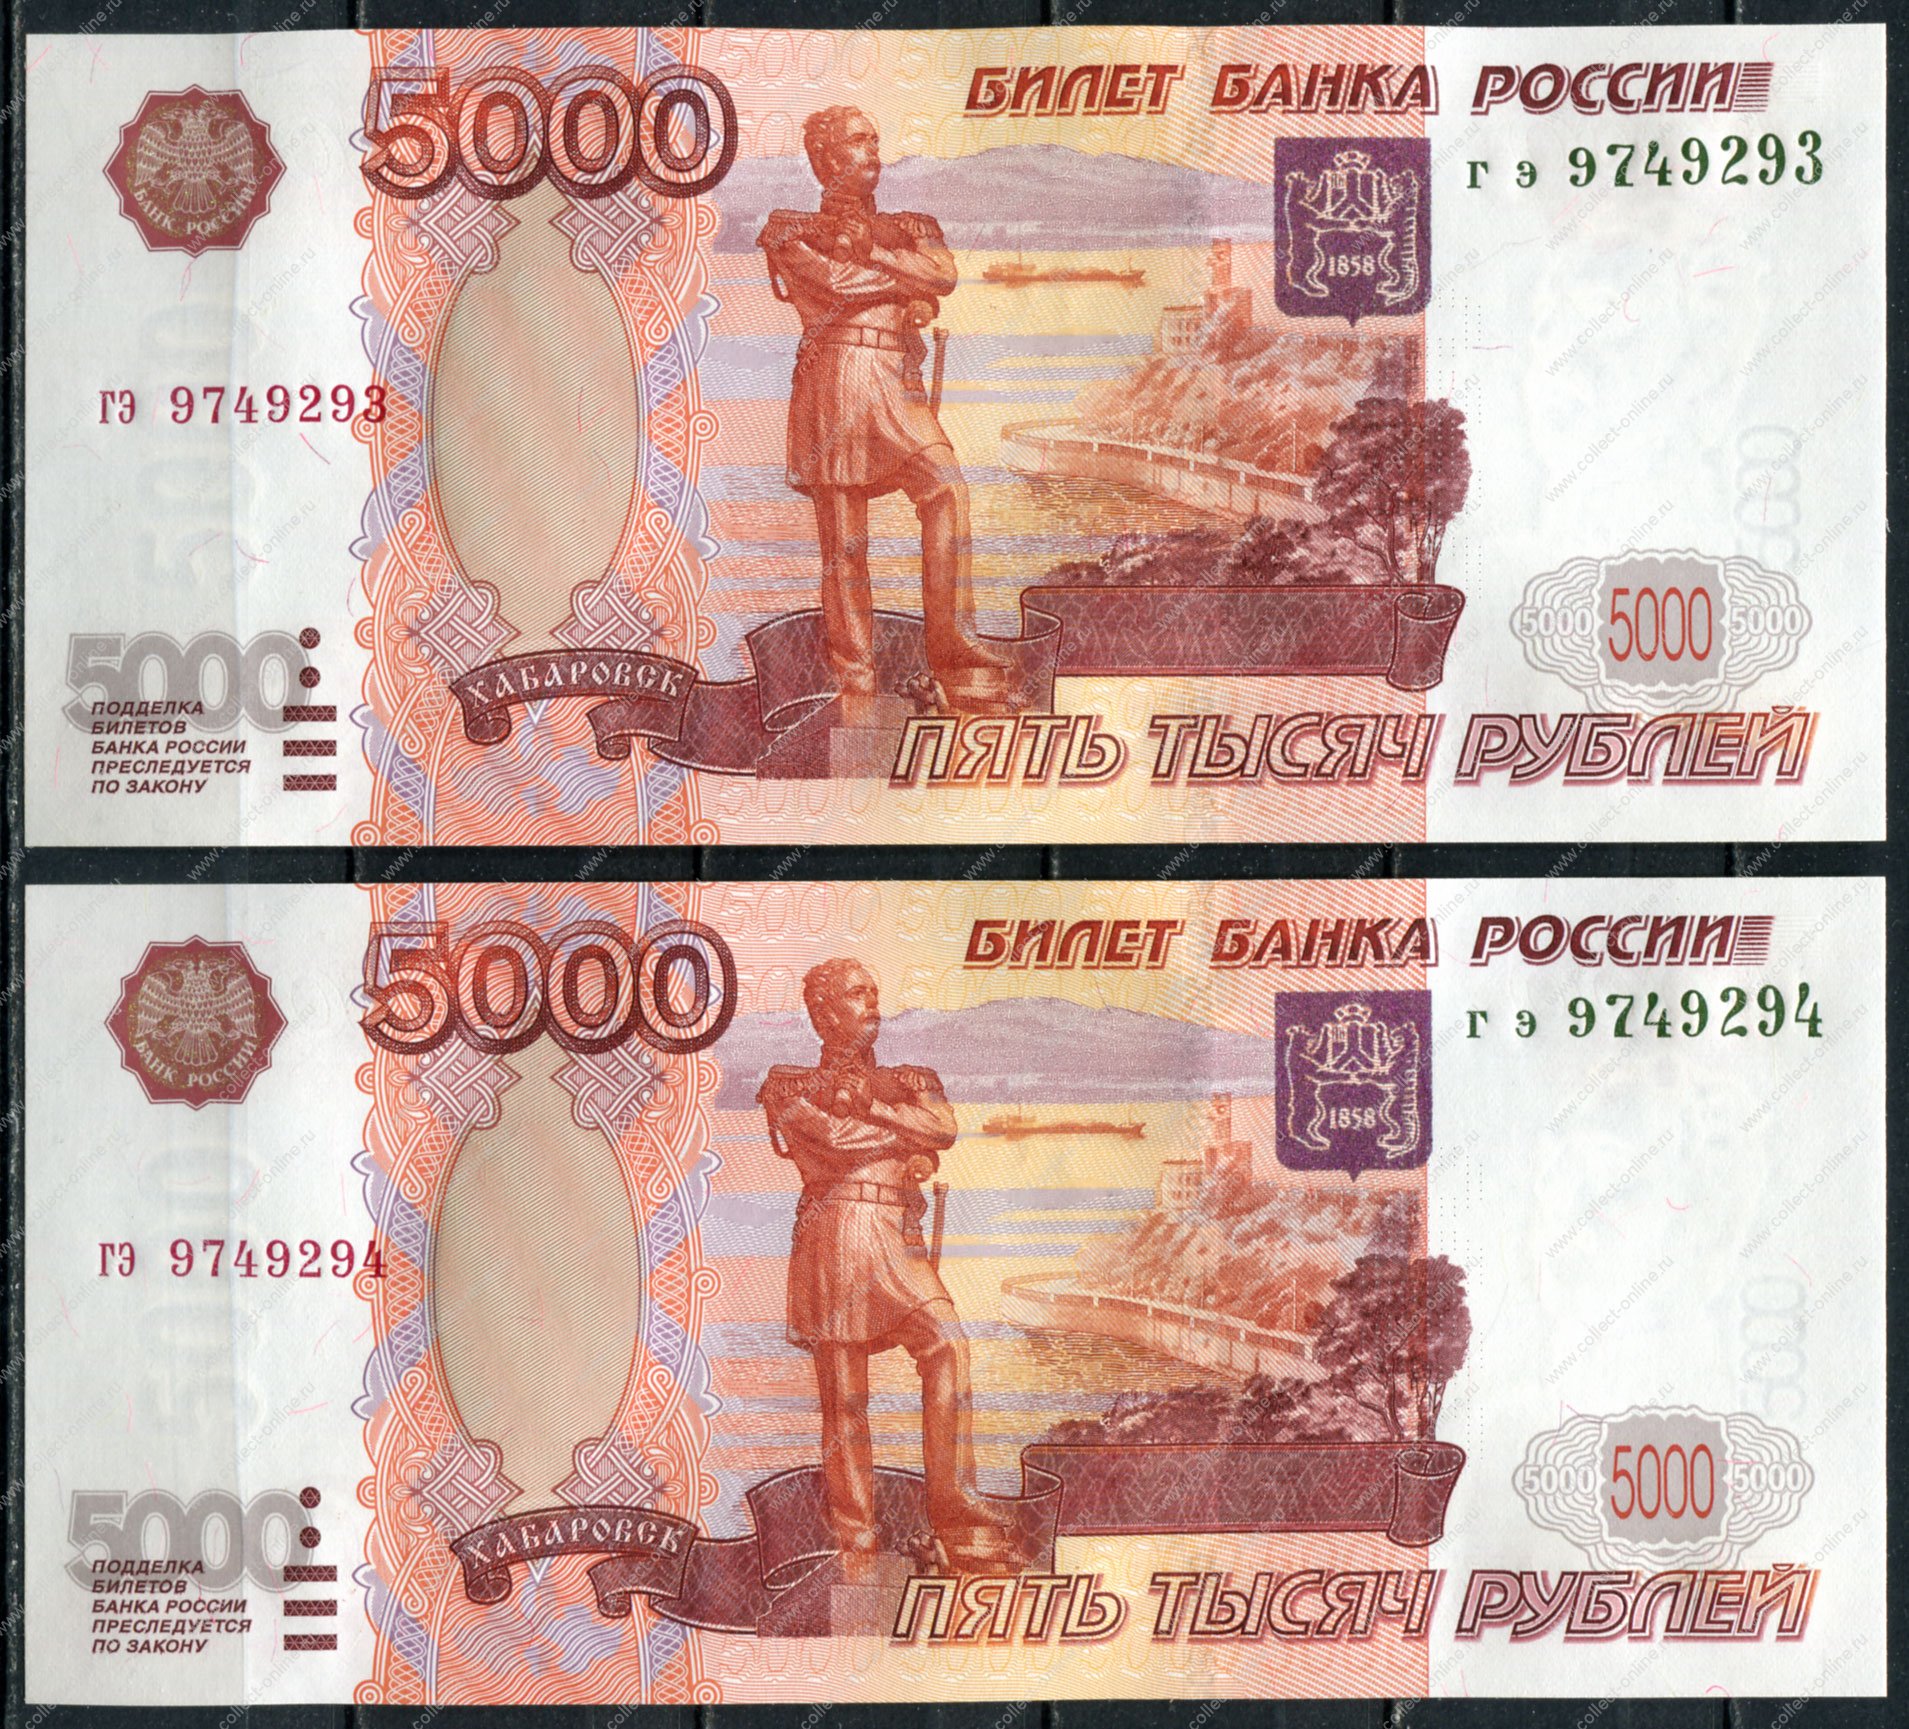 Размер 5000 рублей